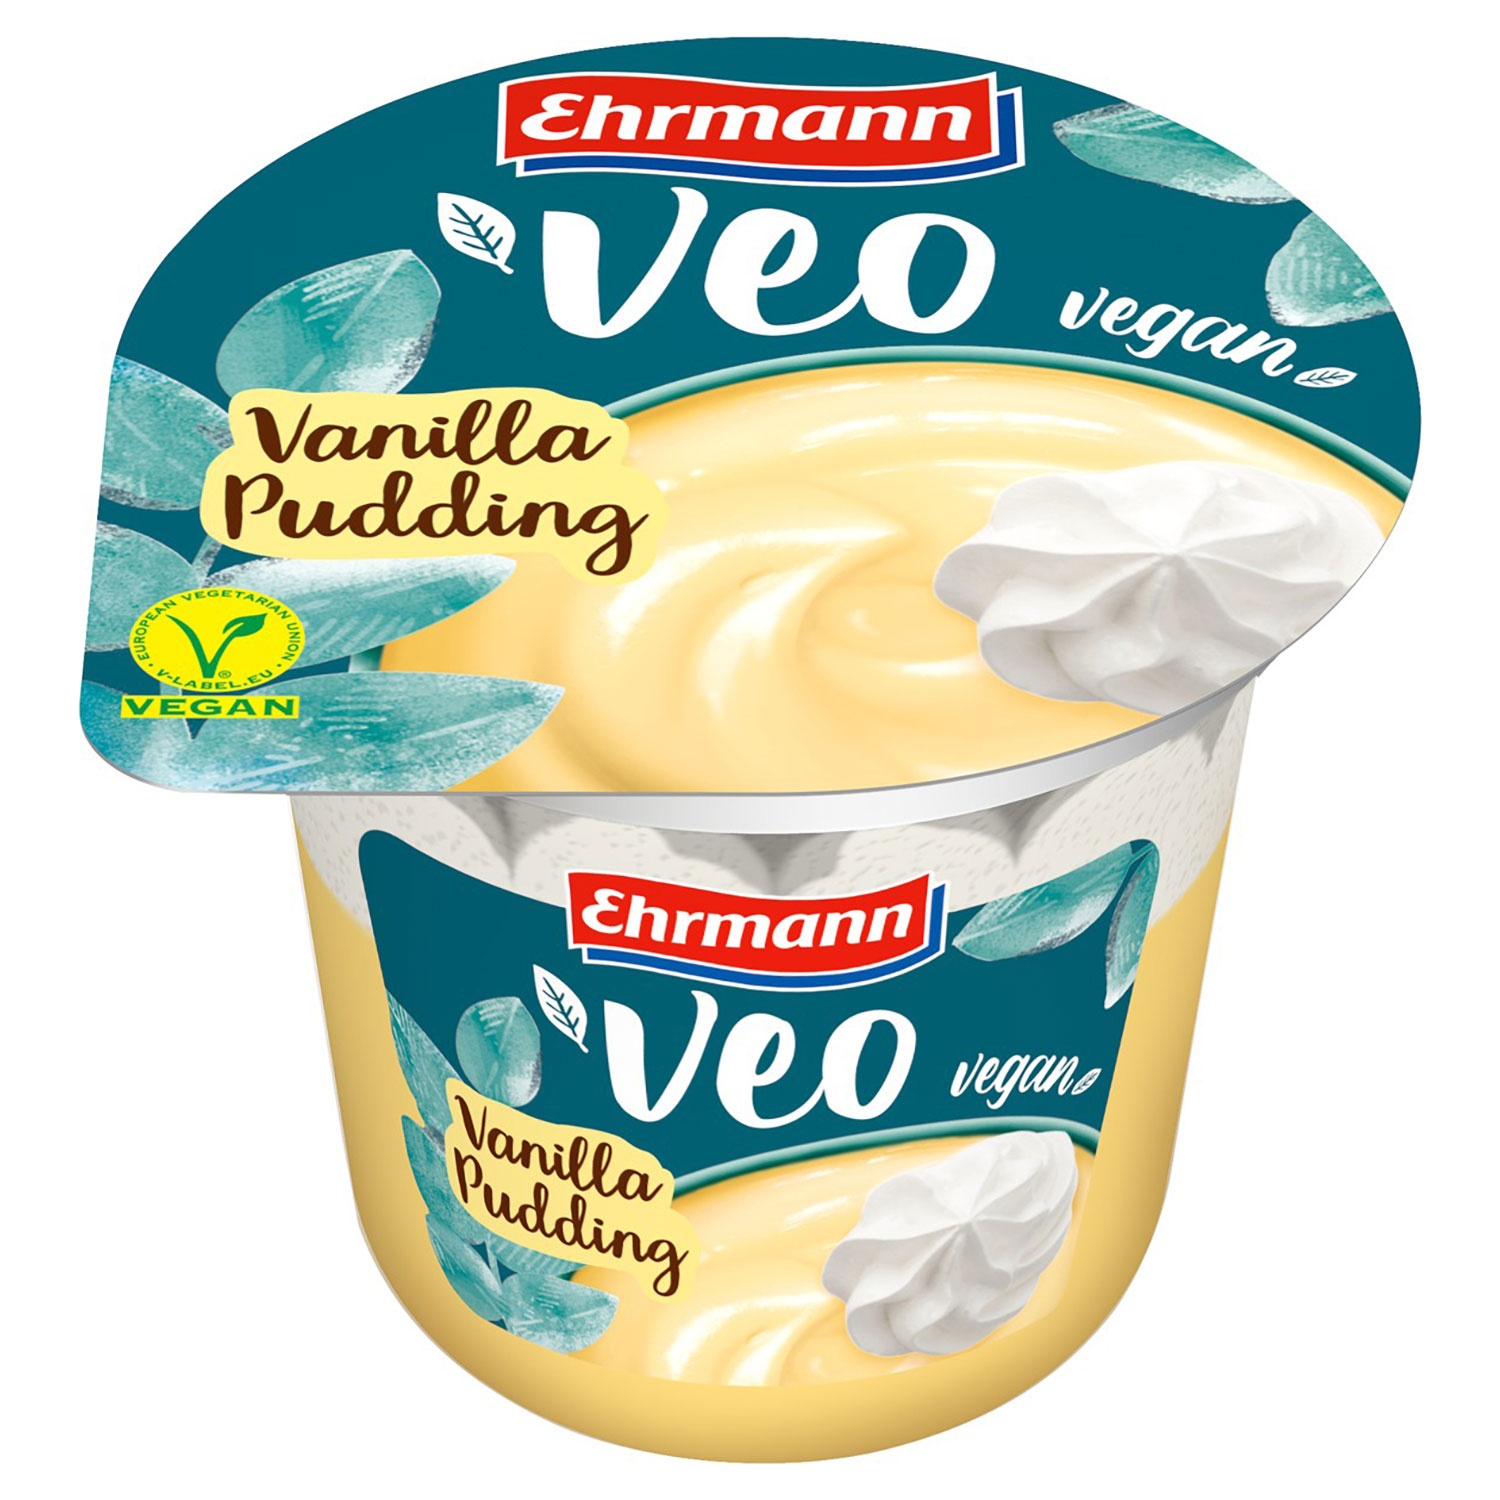 EHRMANN Veo Vegan Pudding mit Topping 175 g